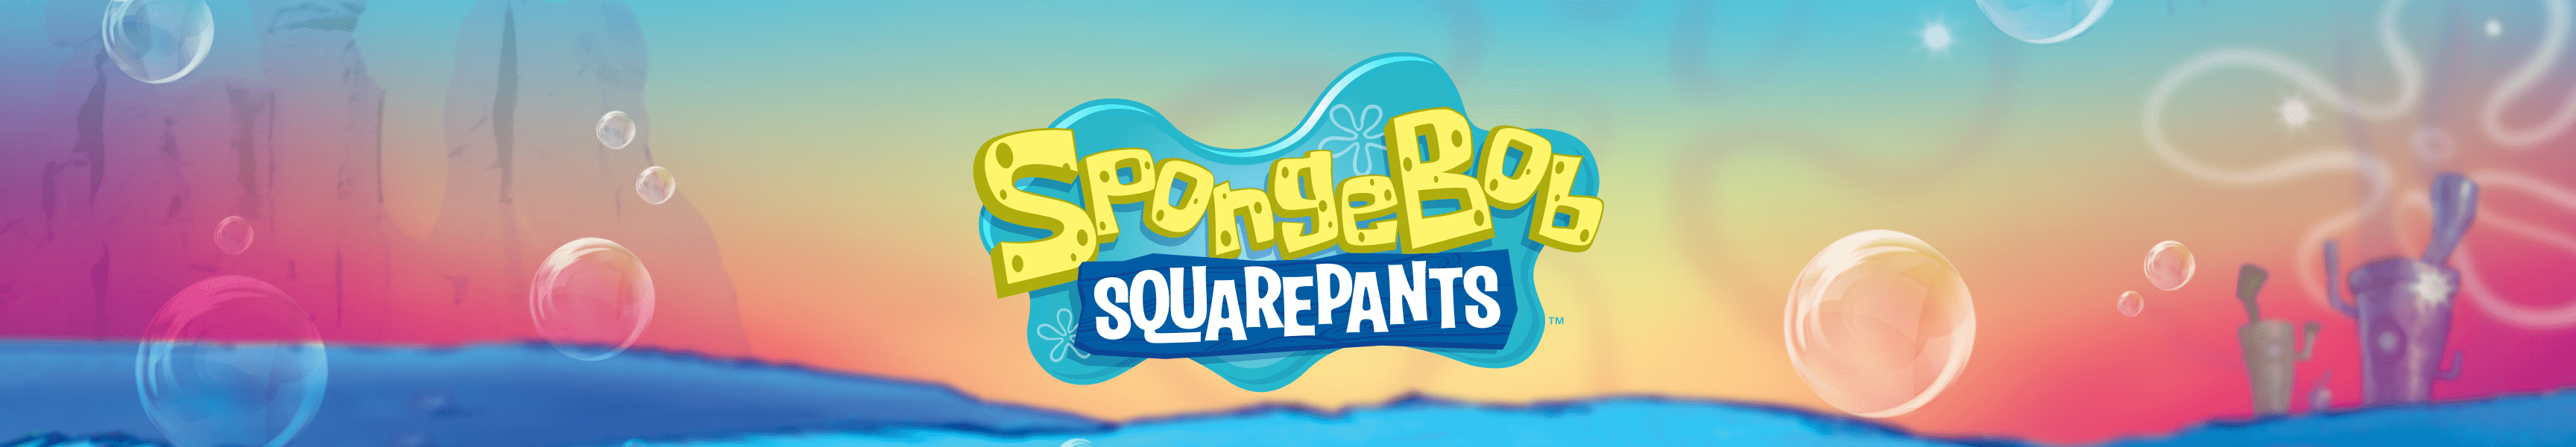 SpongeBob SquarePants Gifts for Him